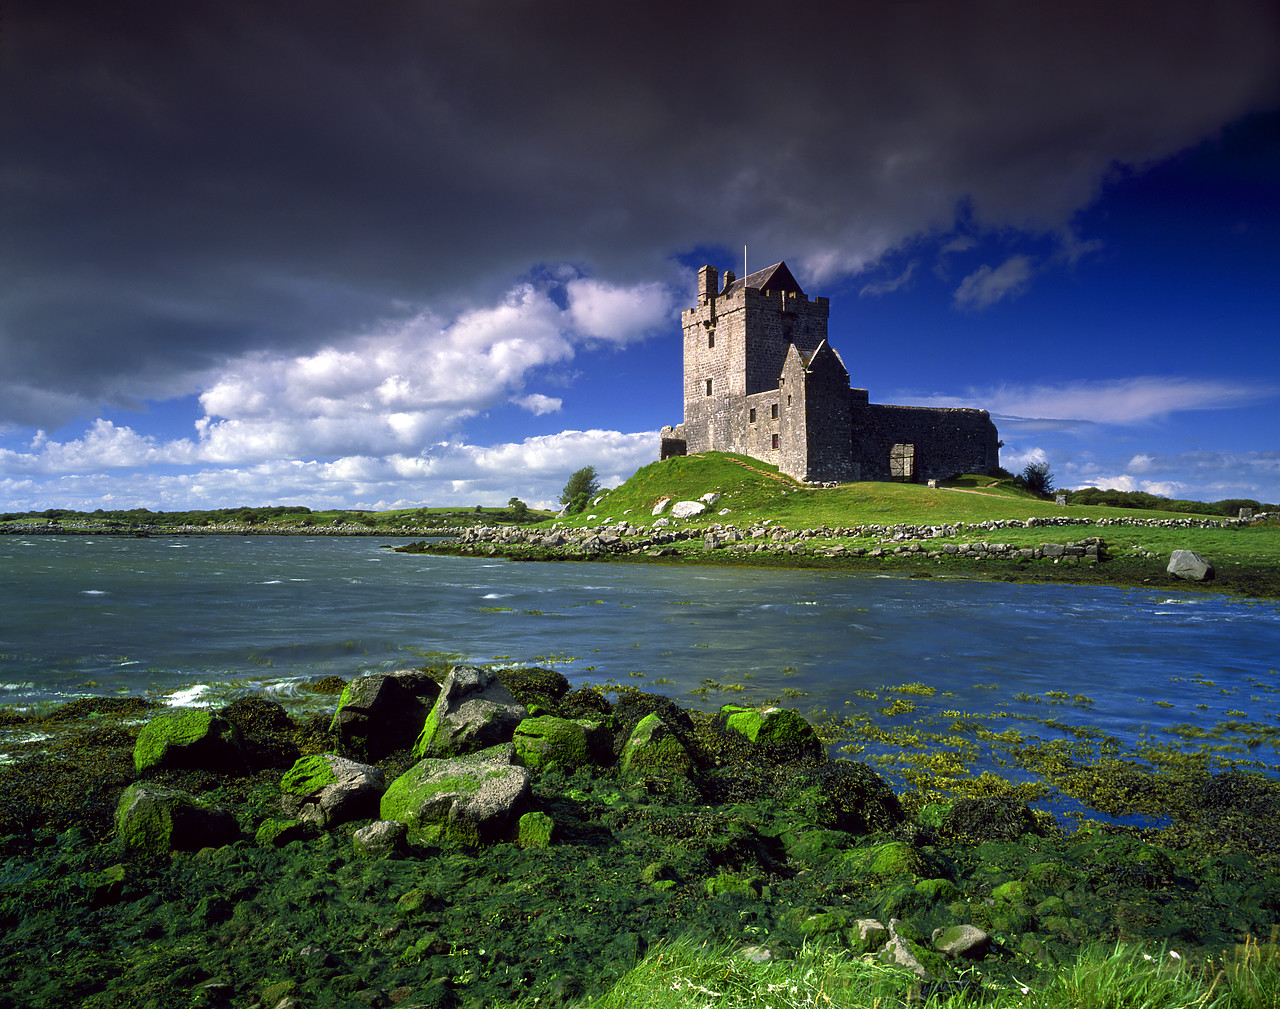 #902942-1 - Dunguaire Castle, Kinvera, Co. Galway, Ireland